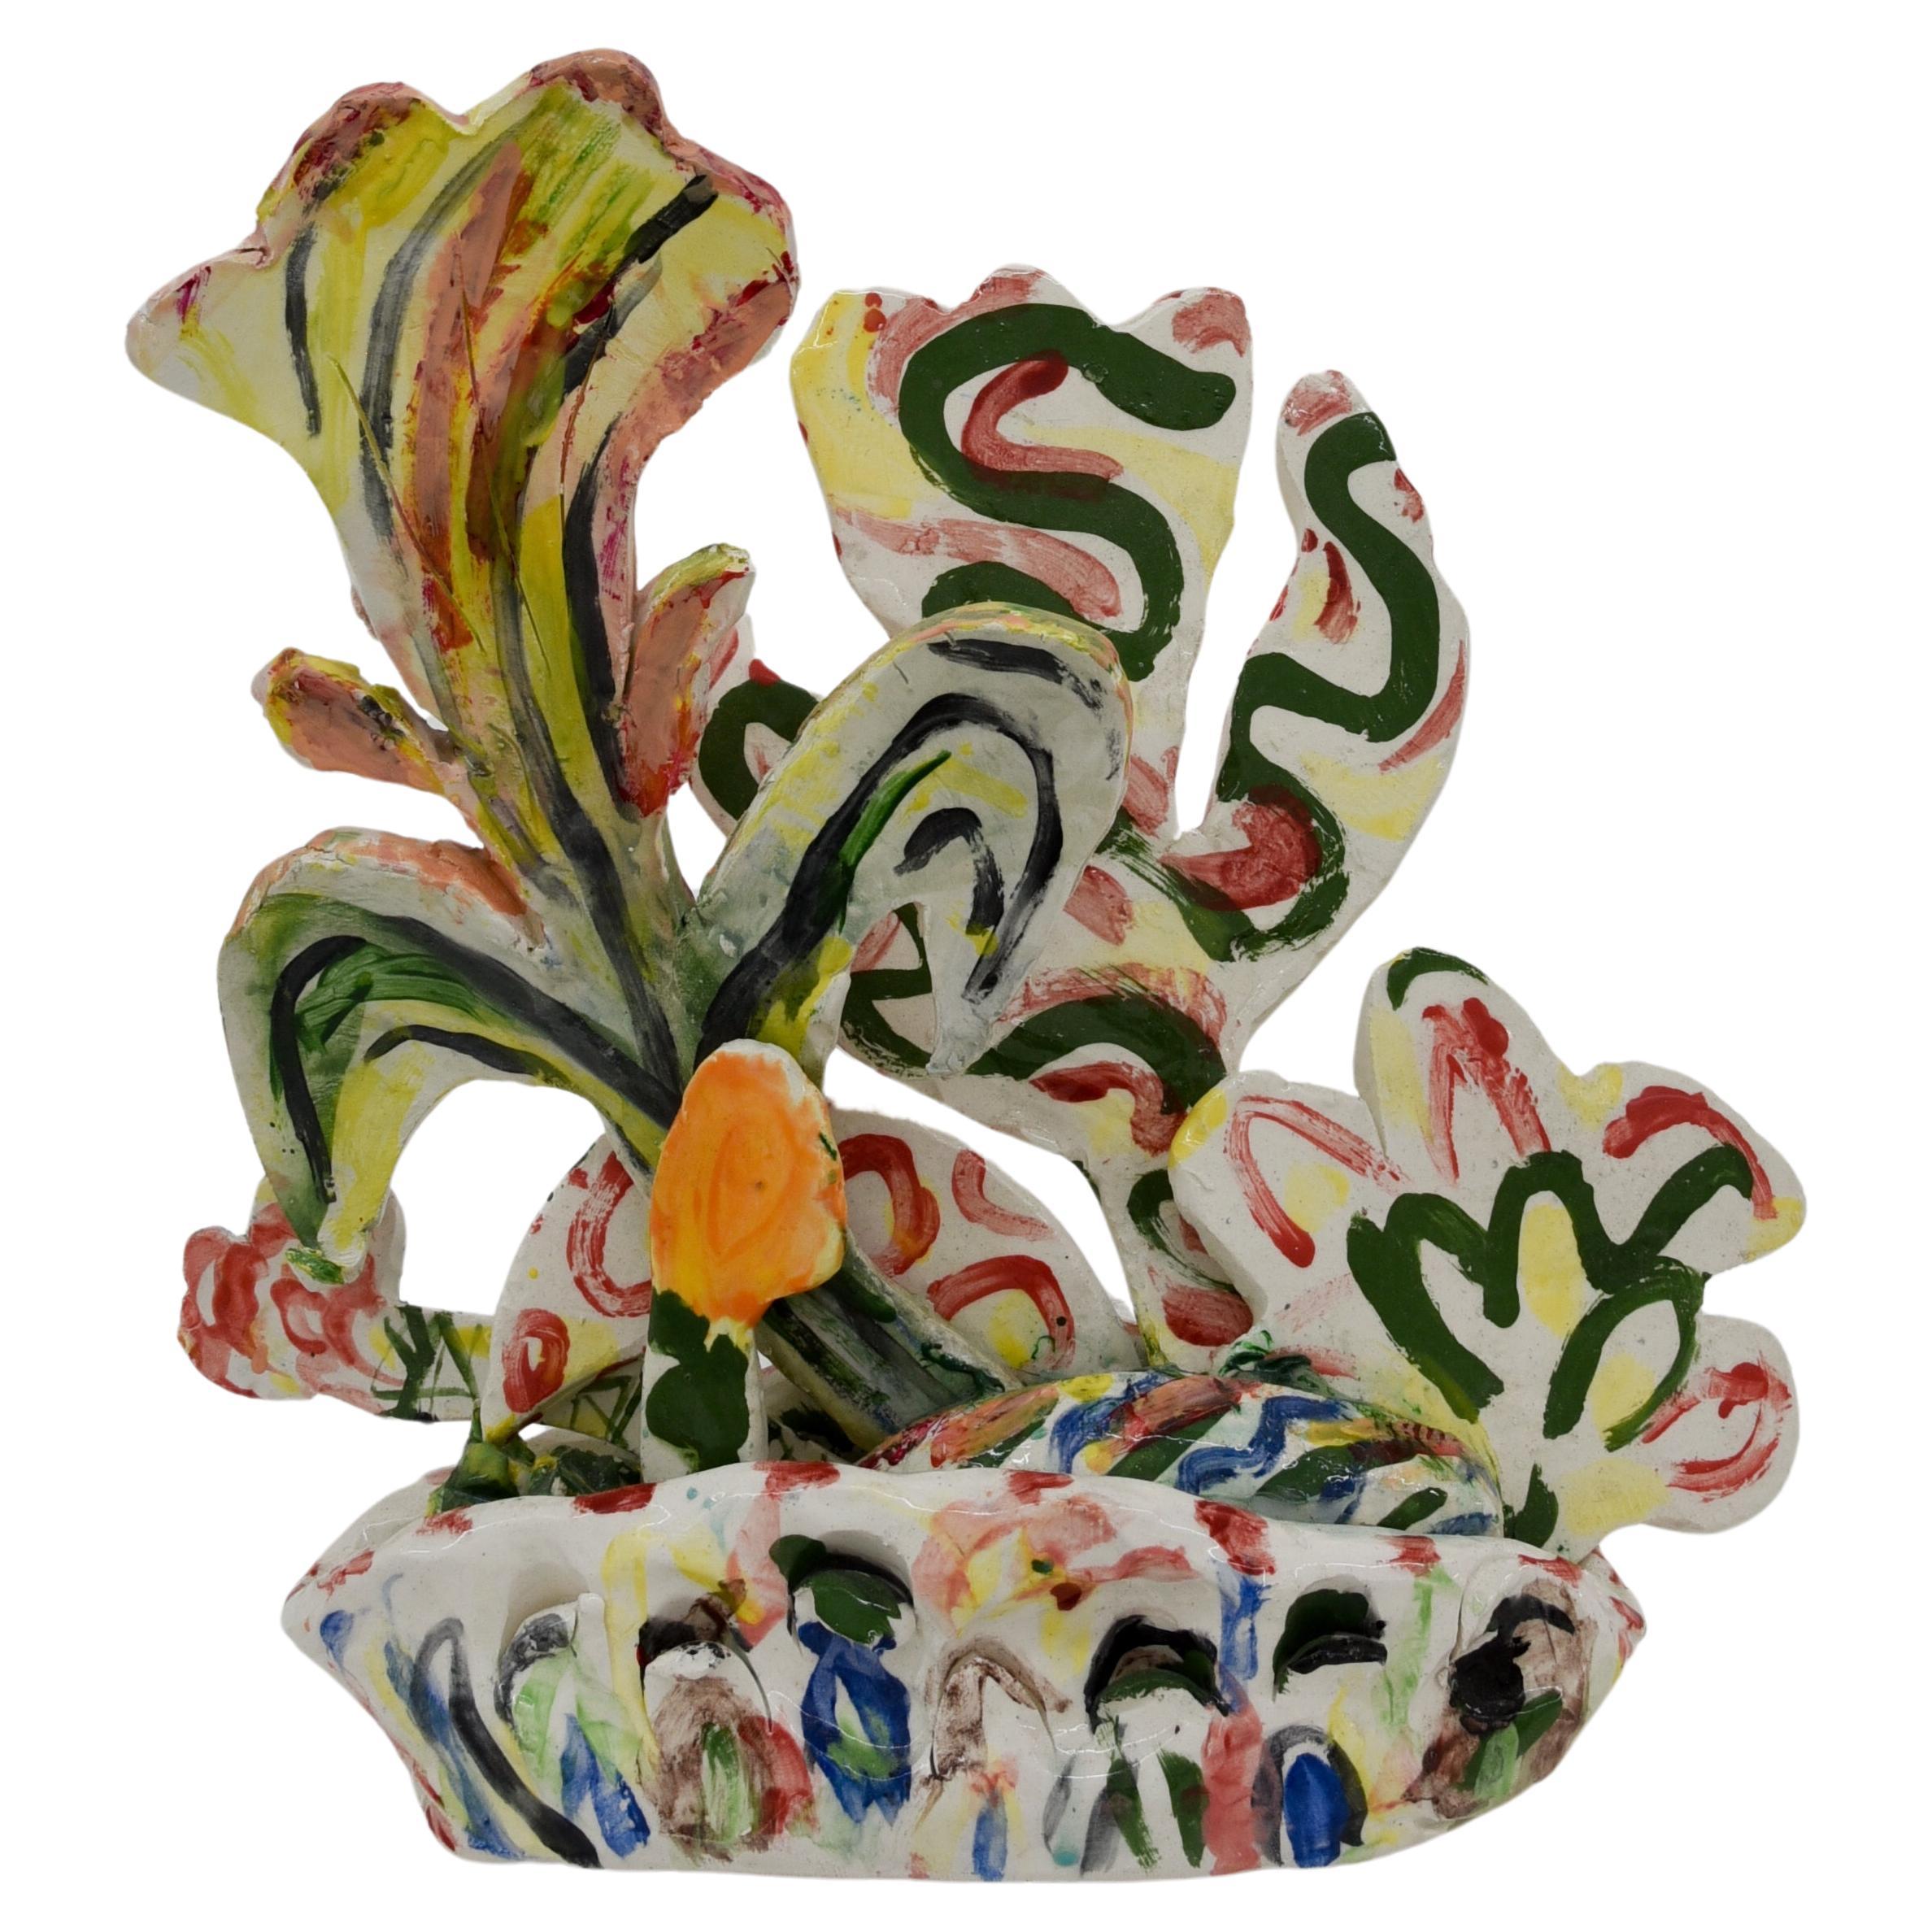 Untitled XXXXVIII. Glazed Ceramic Sculpture For Sale